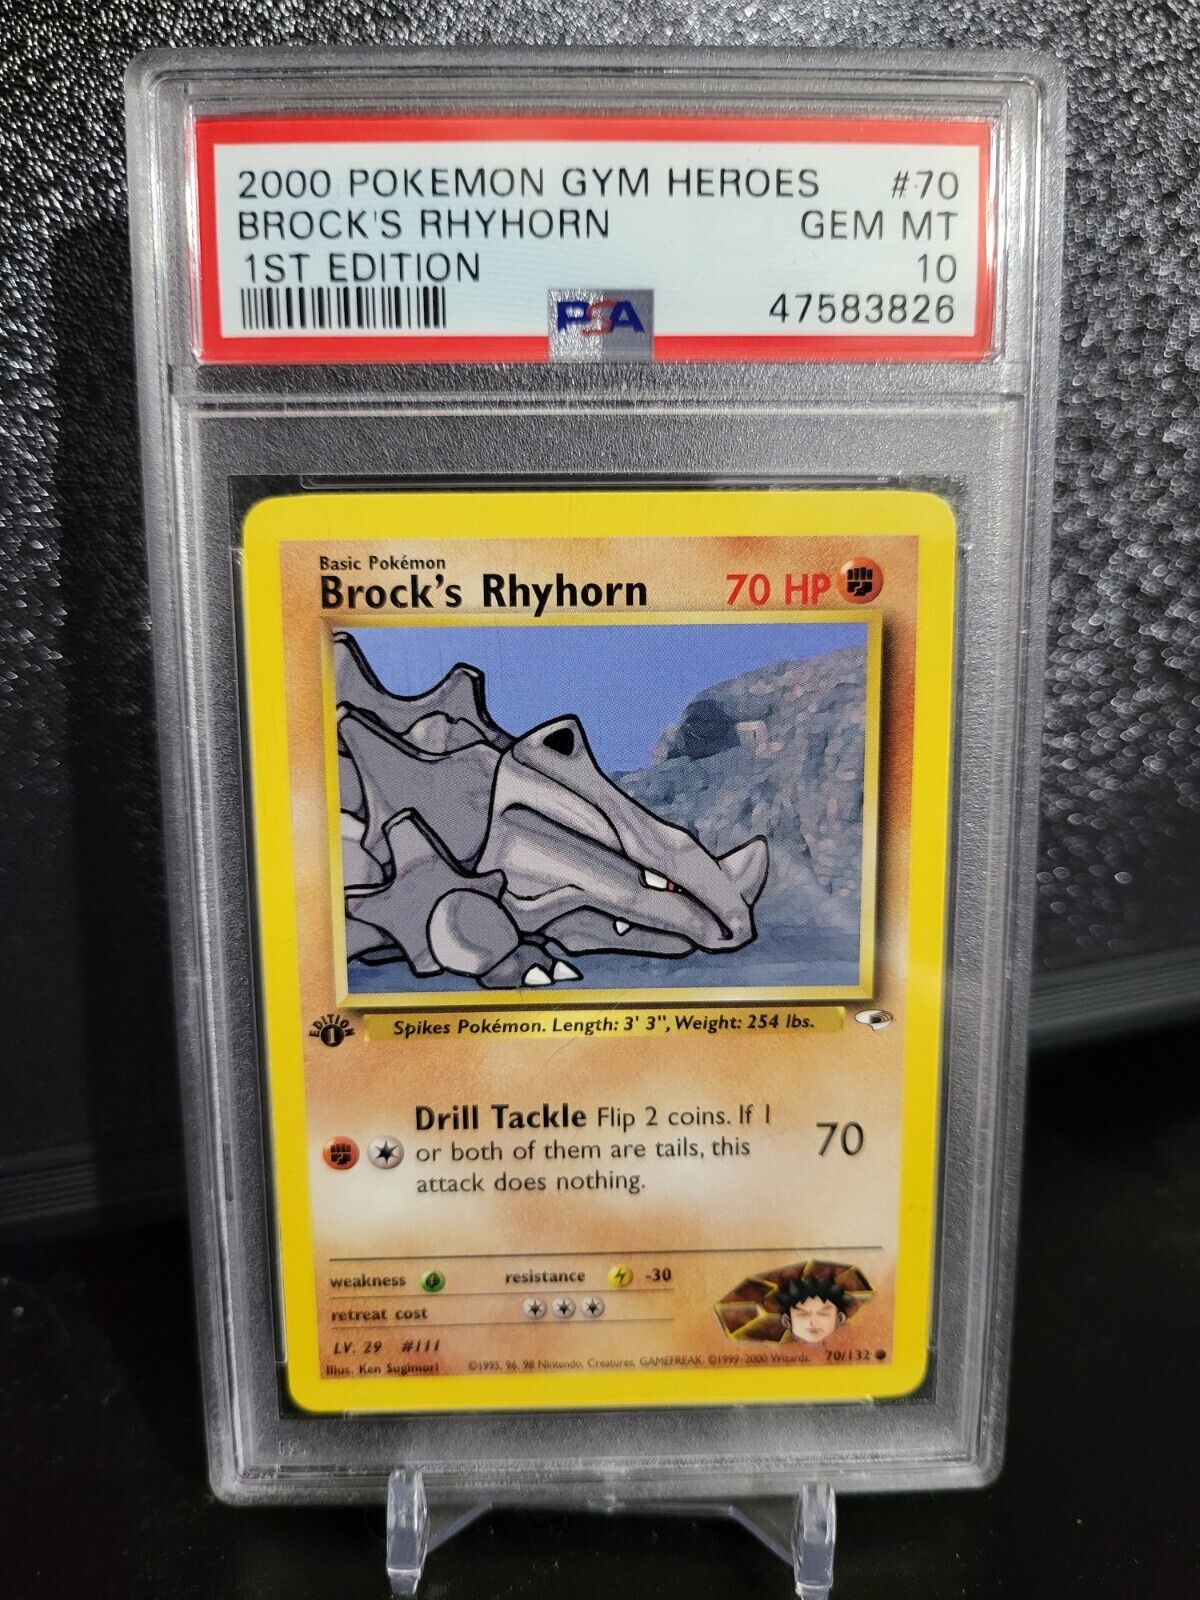 Brock's Rhyhorn #70 Gym Heroes 1st Edition - Pokemon Card WOTC - PSA 10